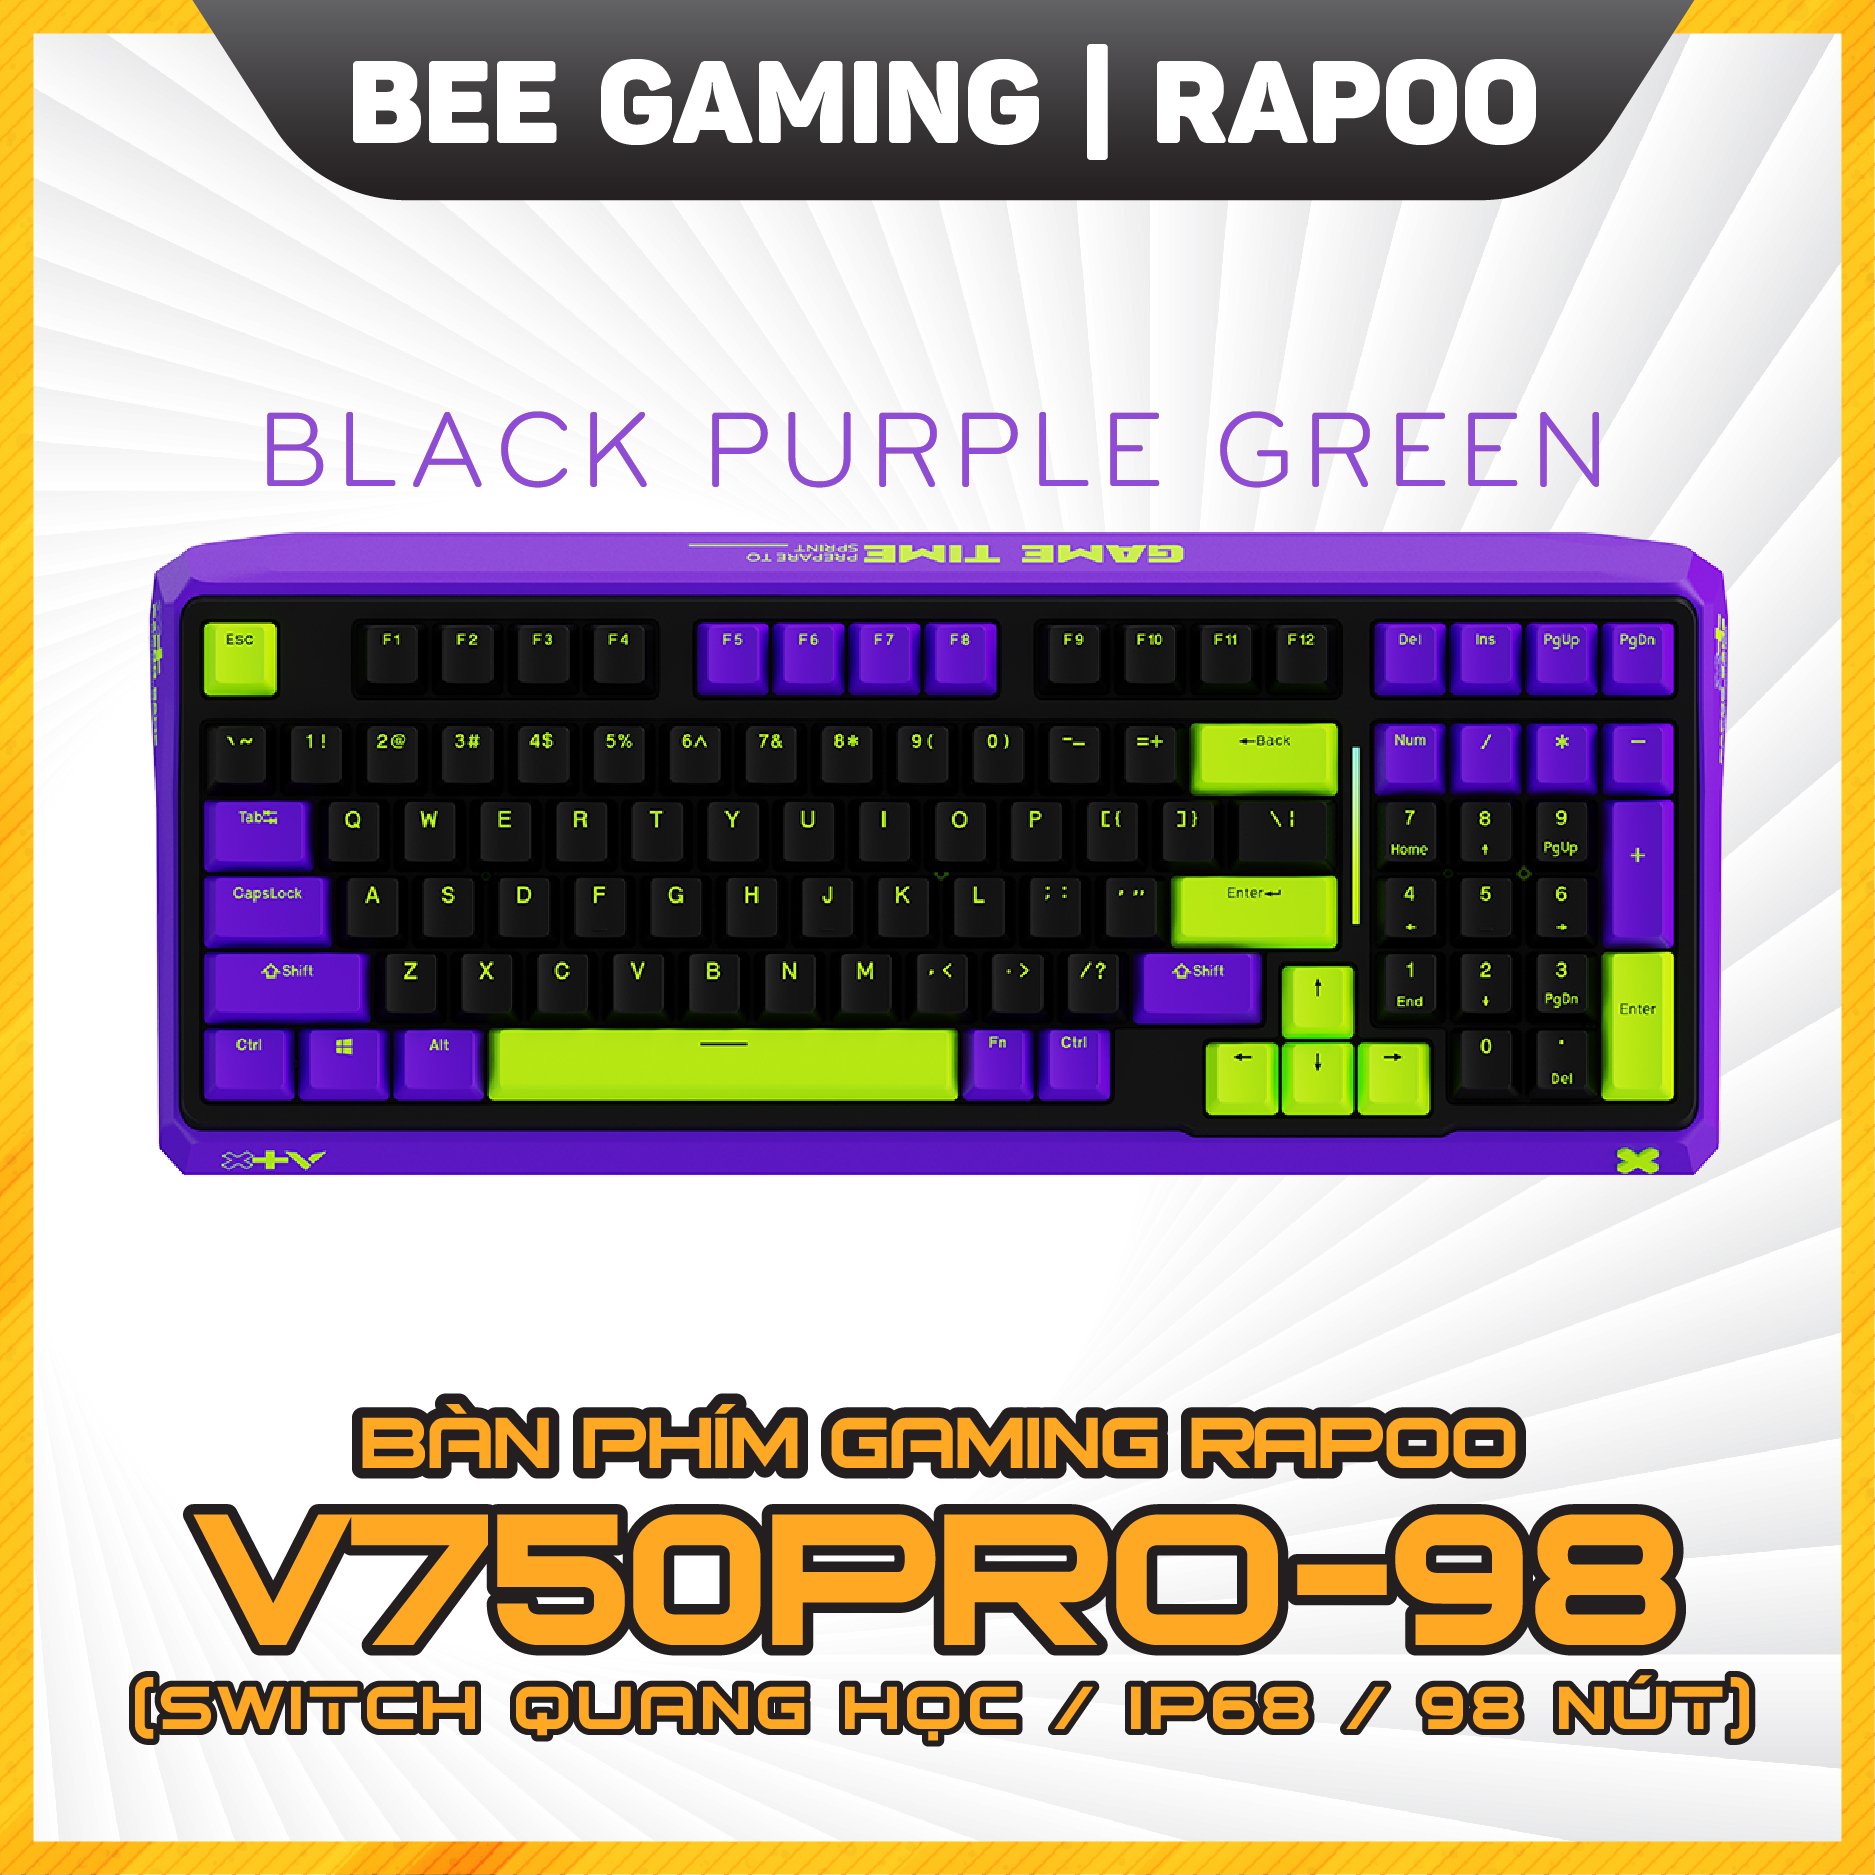 ban-phim-gaming-quang-co-rapoo-v750-pro-black-purple-green-beegaming-2